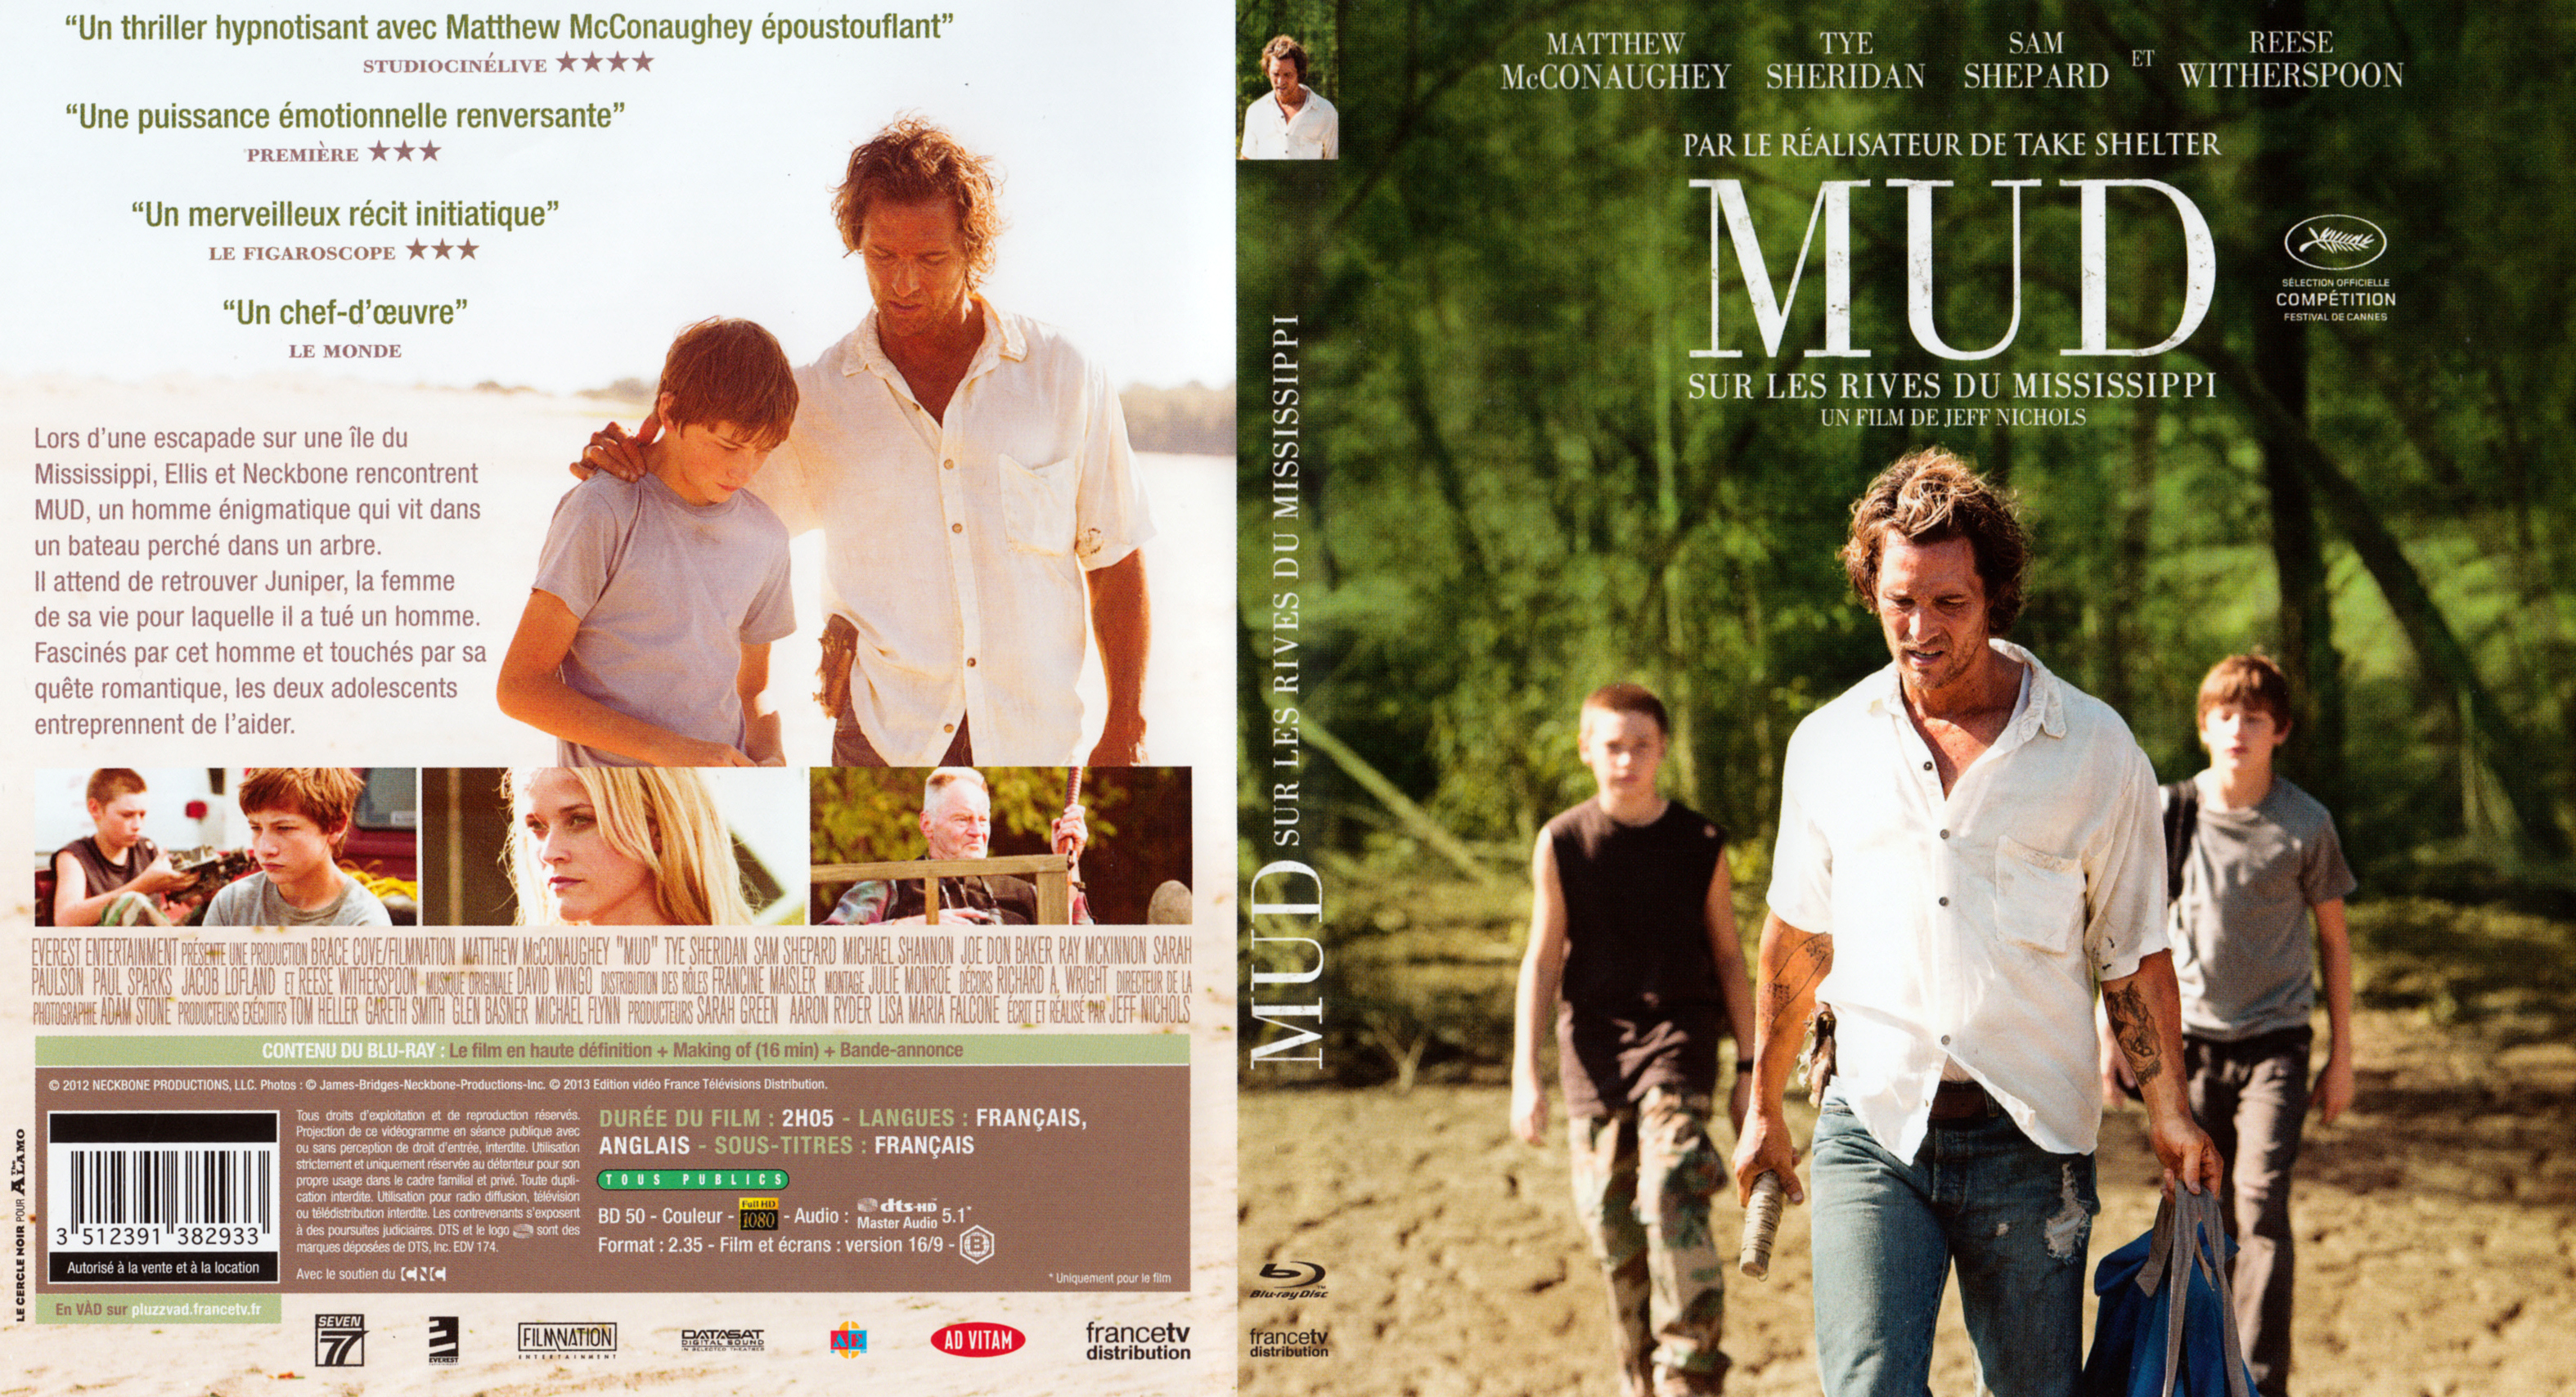 Jaquette DVD Mud Sur les rives du Mississippi (BLU-RAY)